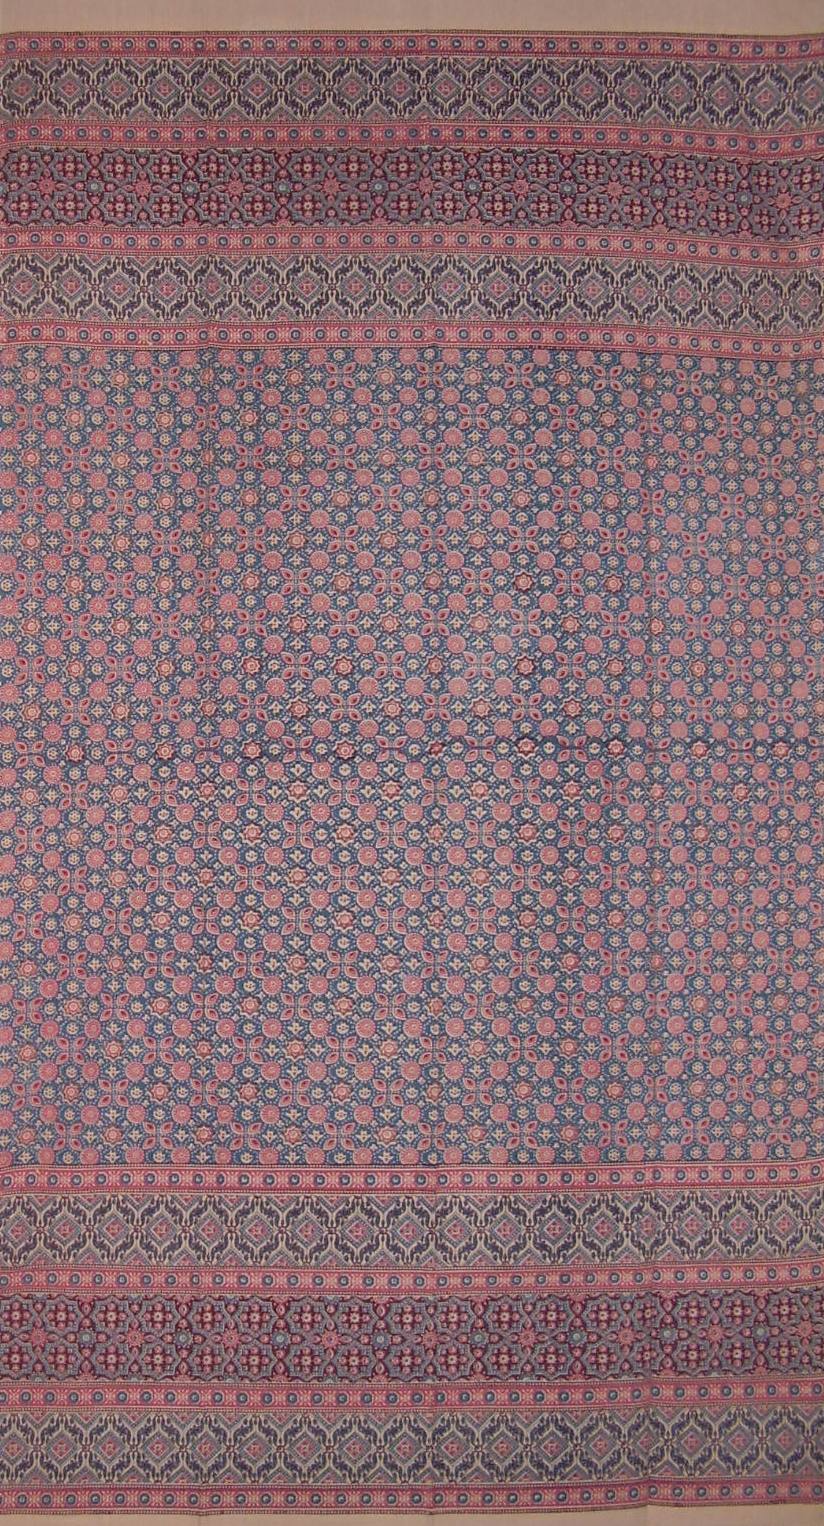 Gordijn met Marokkaanse Foulard-print, draperiepaneel, katoen, 46 x 82 inch, zalmroze